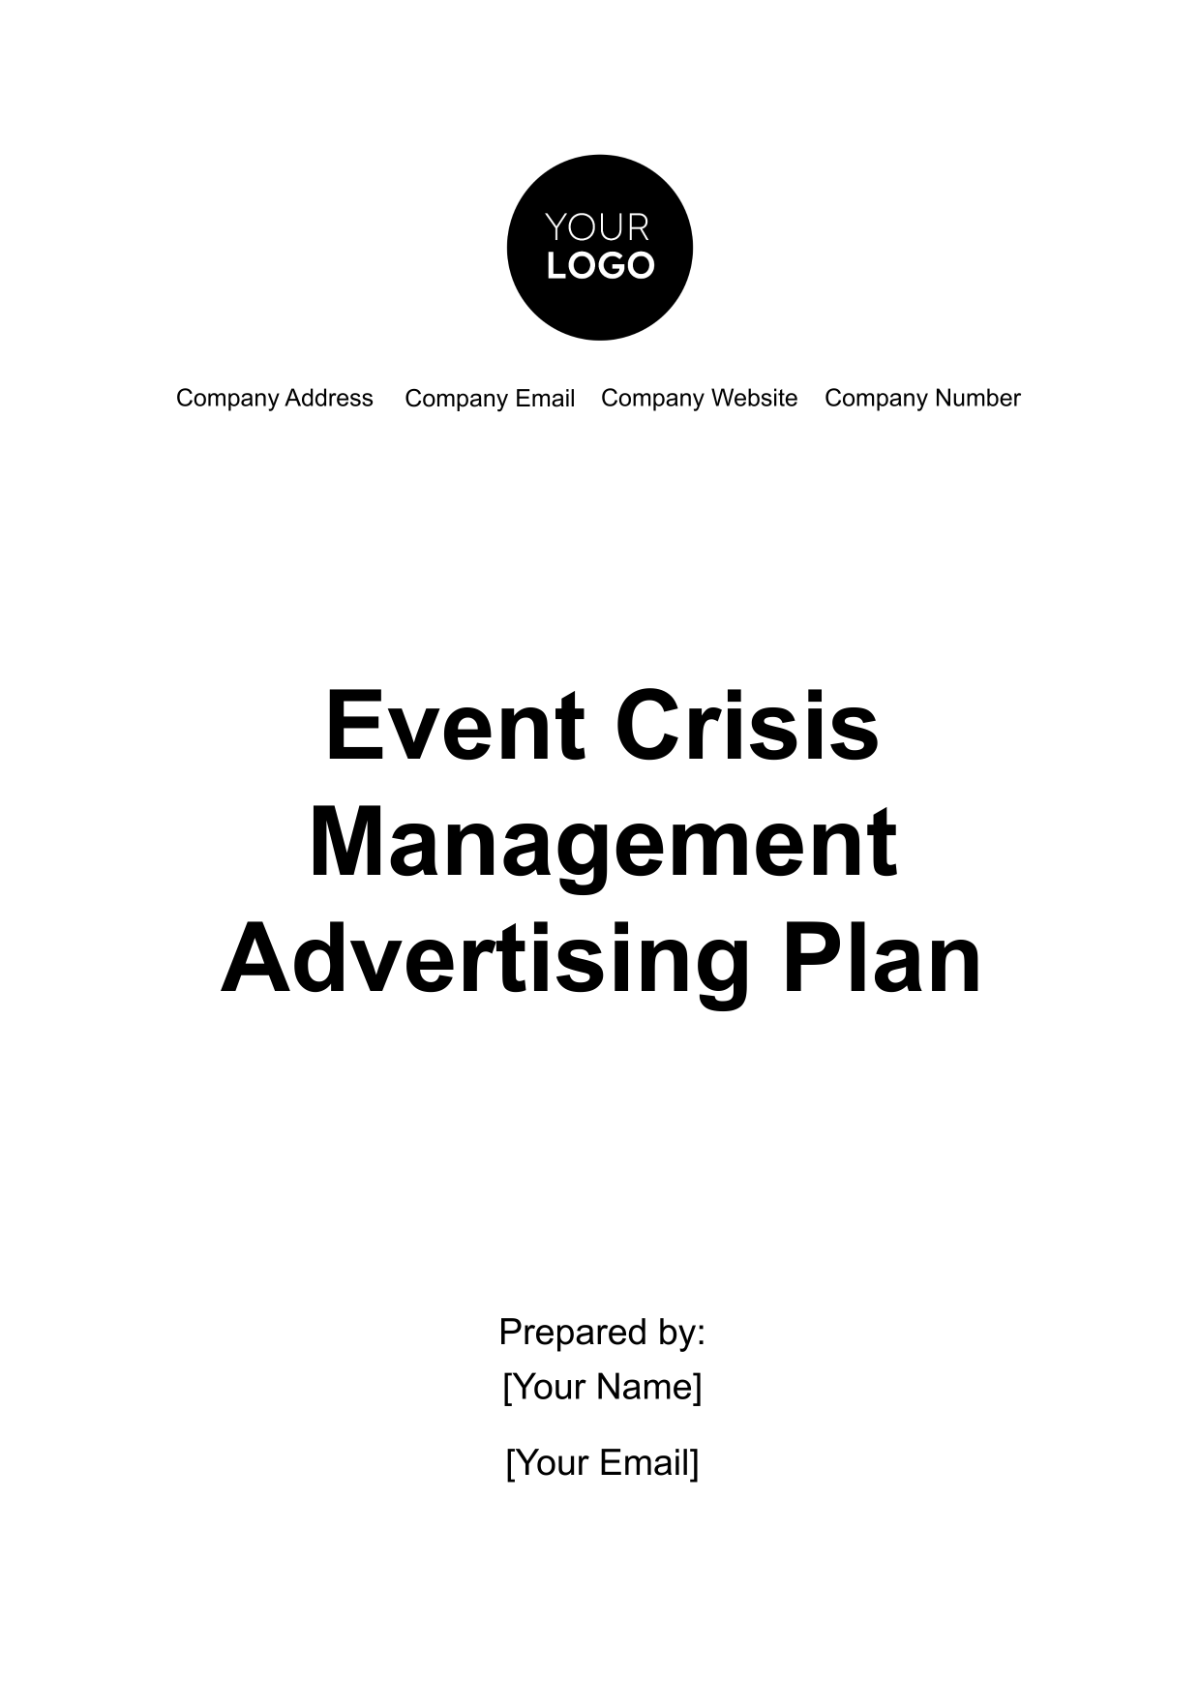 Event Crisis Management Advertising Plan Template